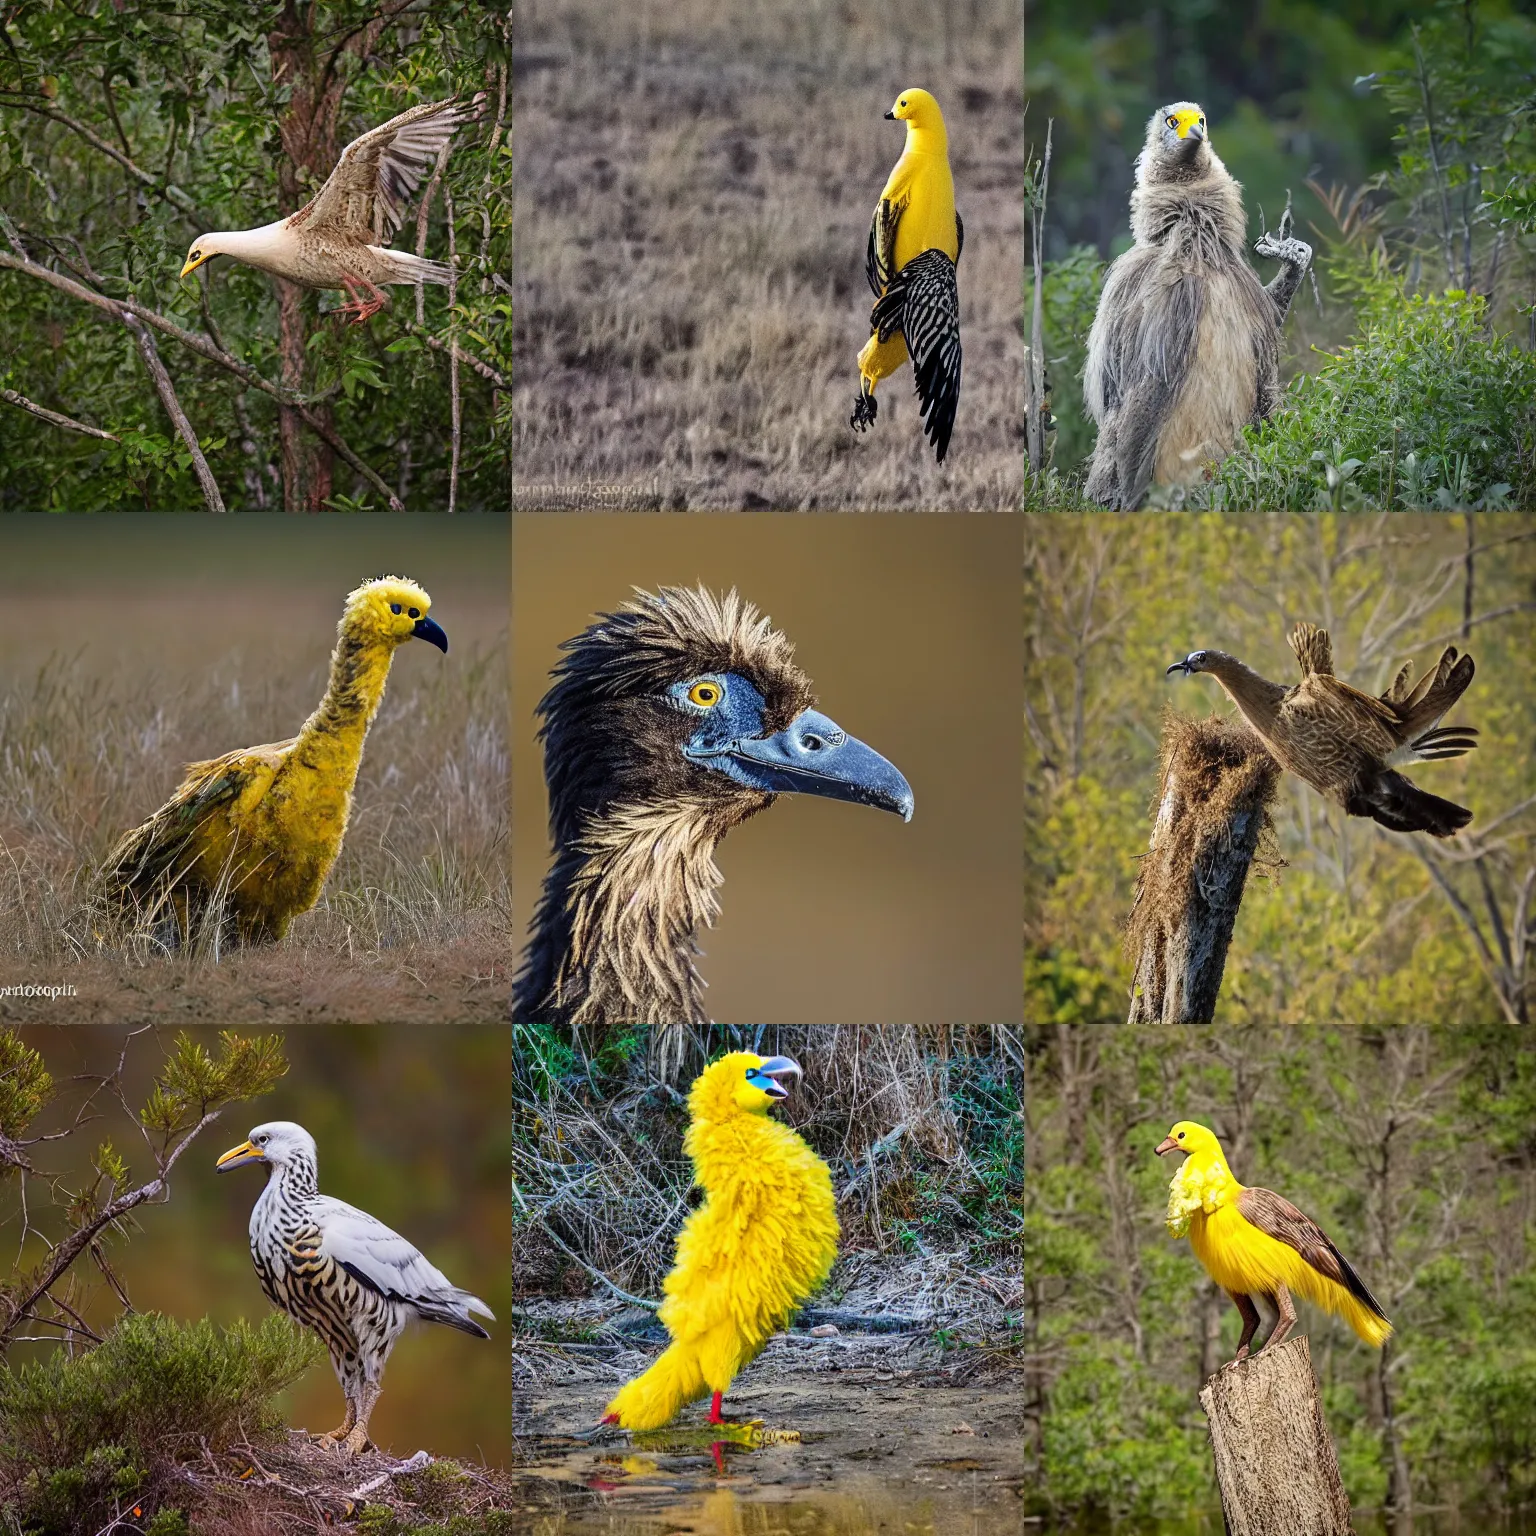 Prompt: big bird in the wild, wildlife photography